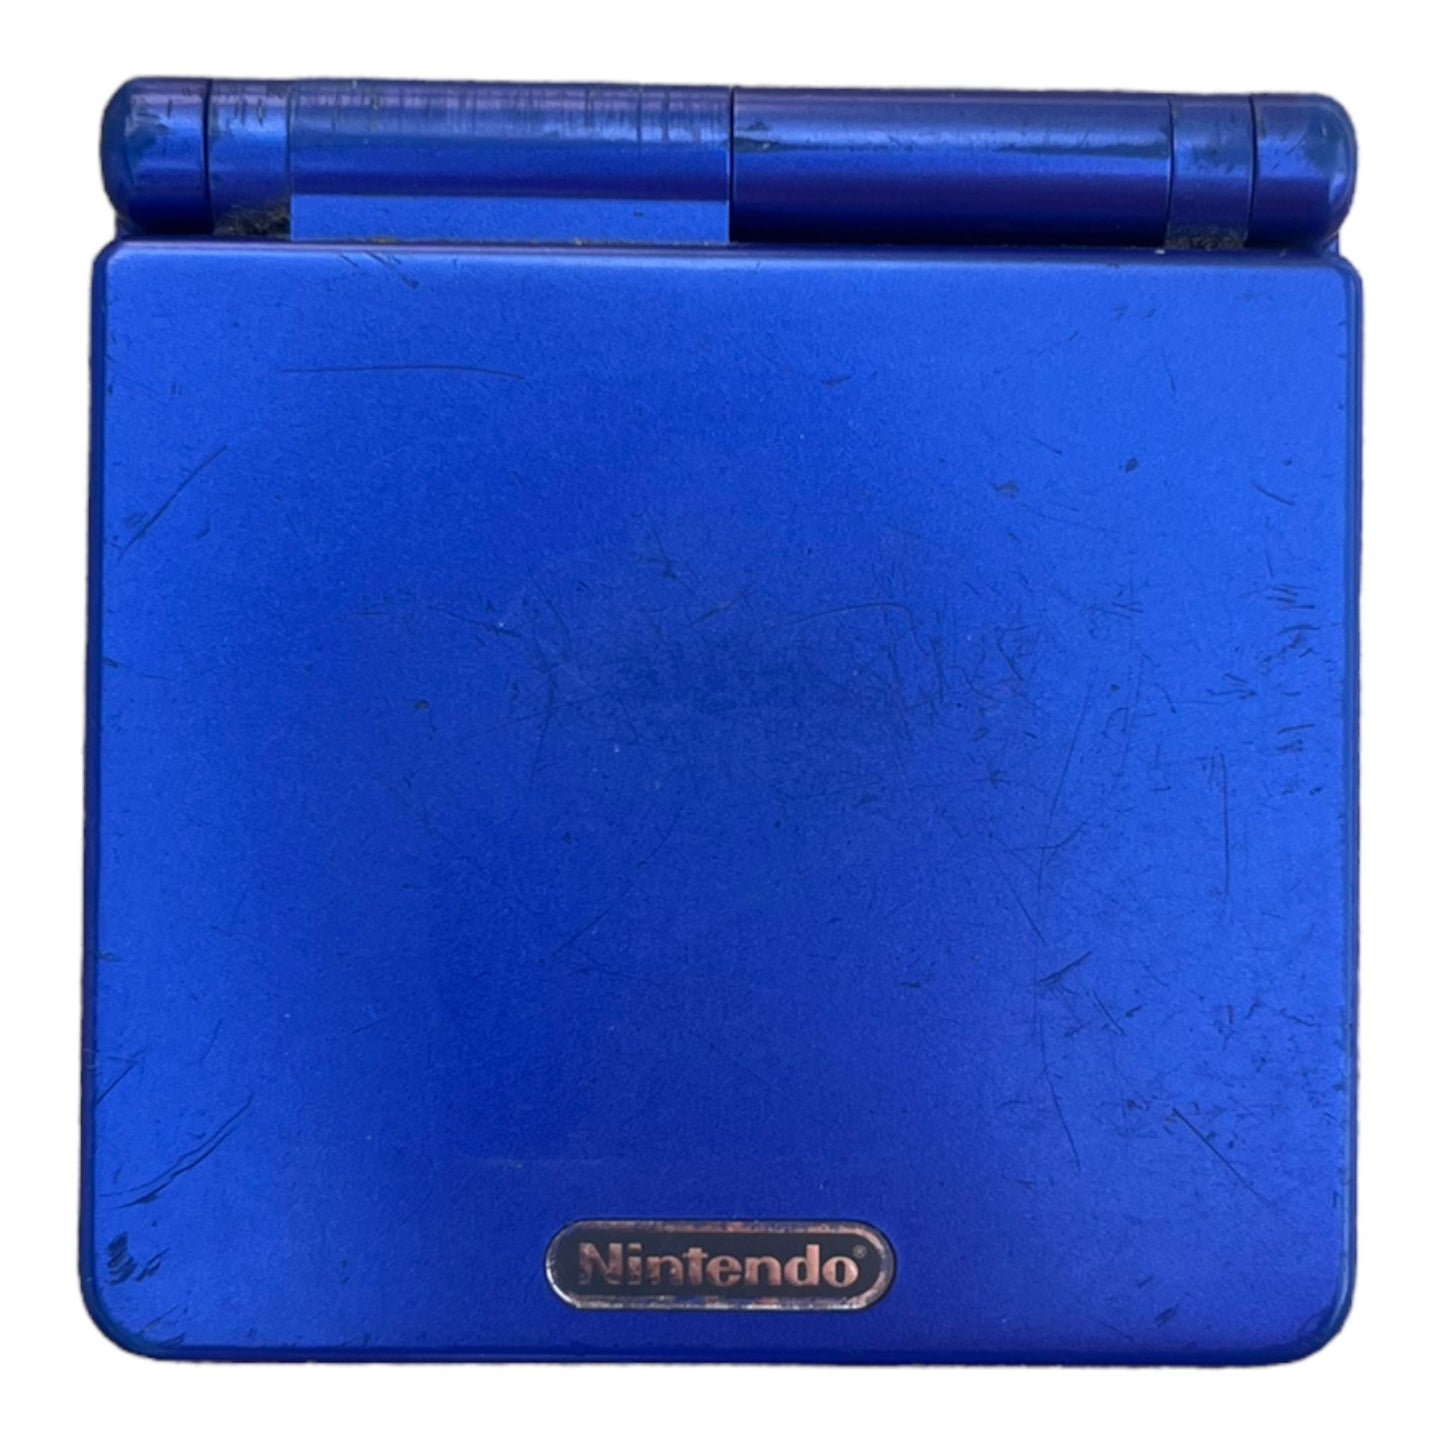 Gameboy Advance SP Blue